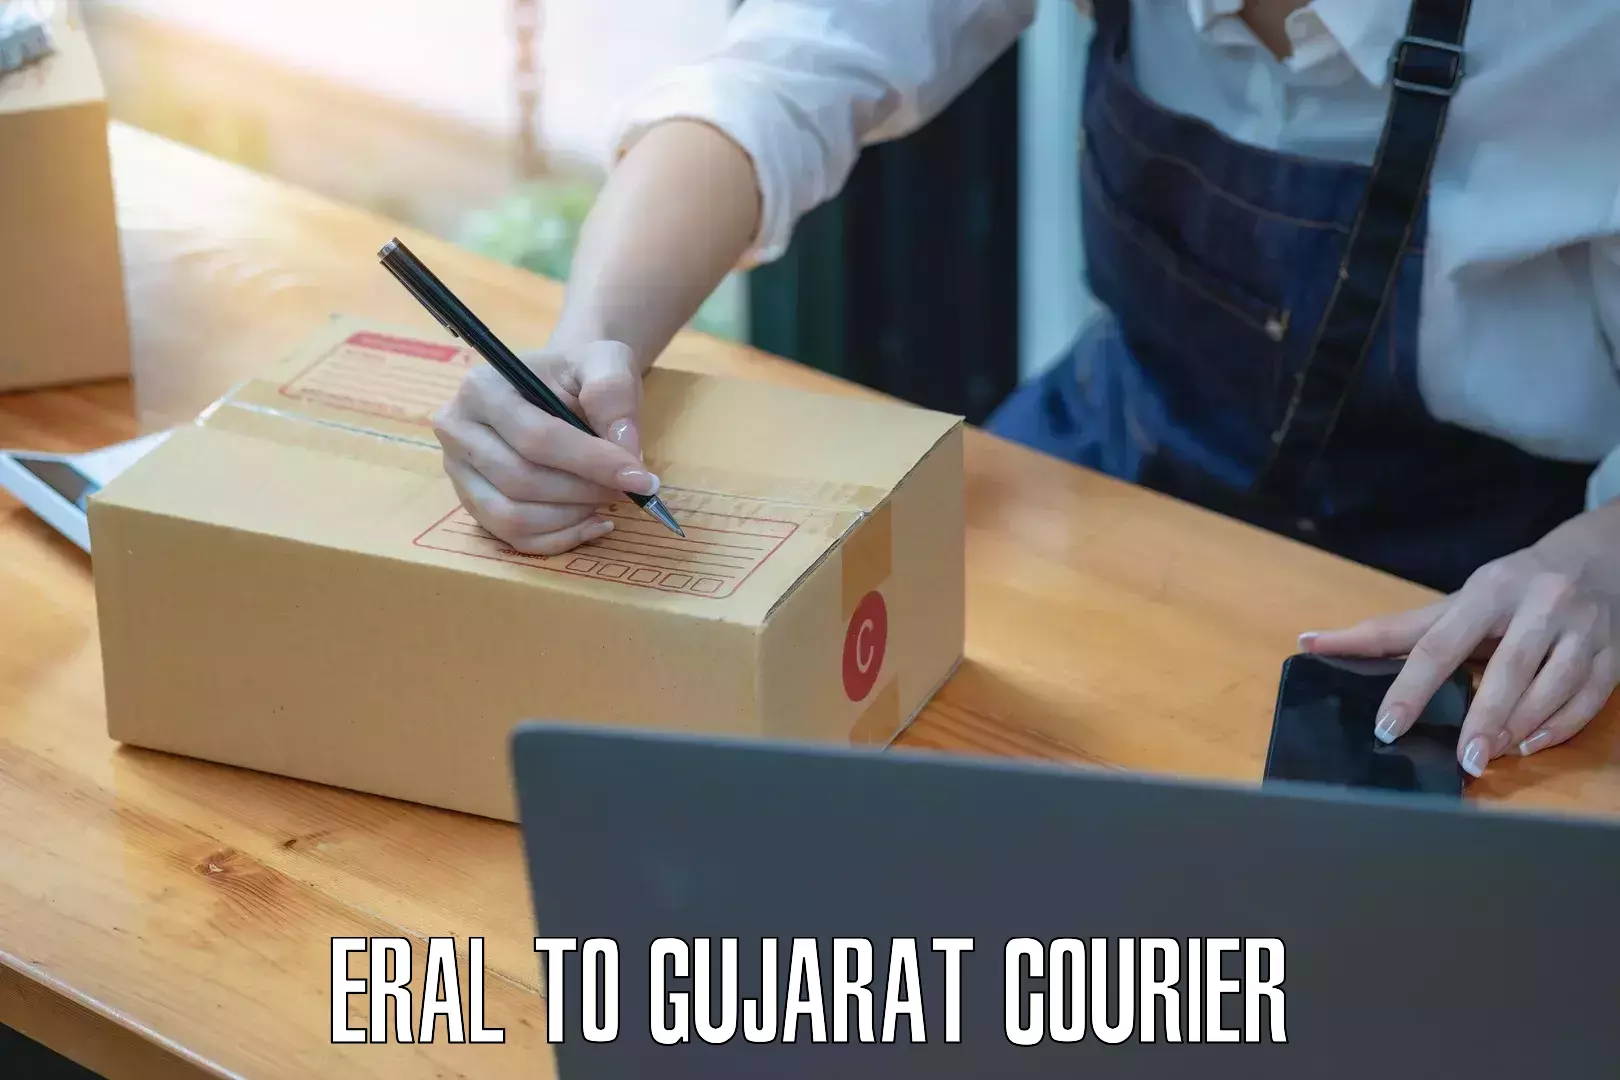 Courier service comparison Eral to Palanpur